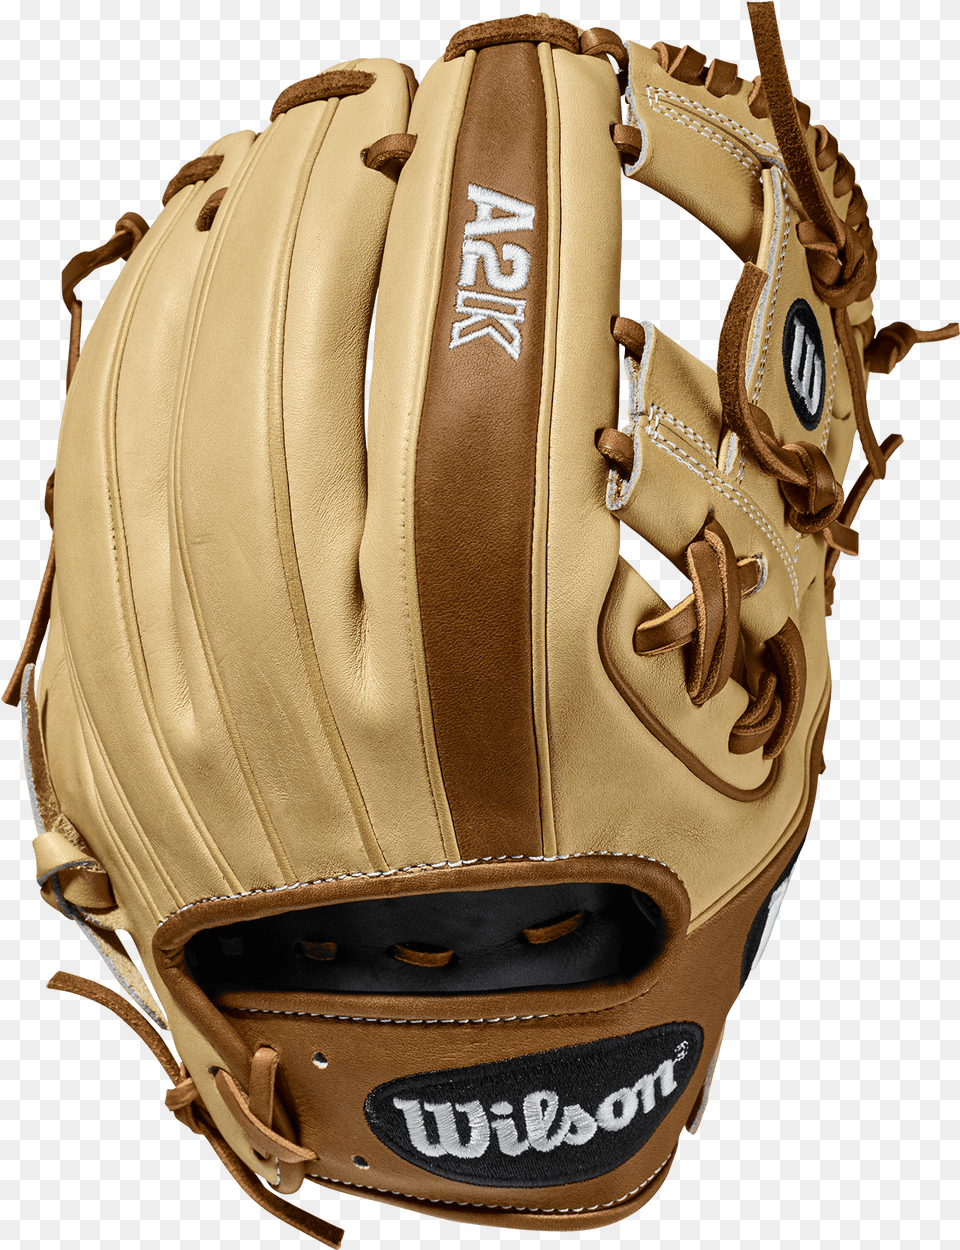 2020 Wilson 1150 Infield Baseball Glove Baseball Glove Baseball Glove, Clothing, Sport, Accessories Free Png